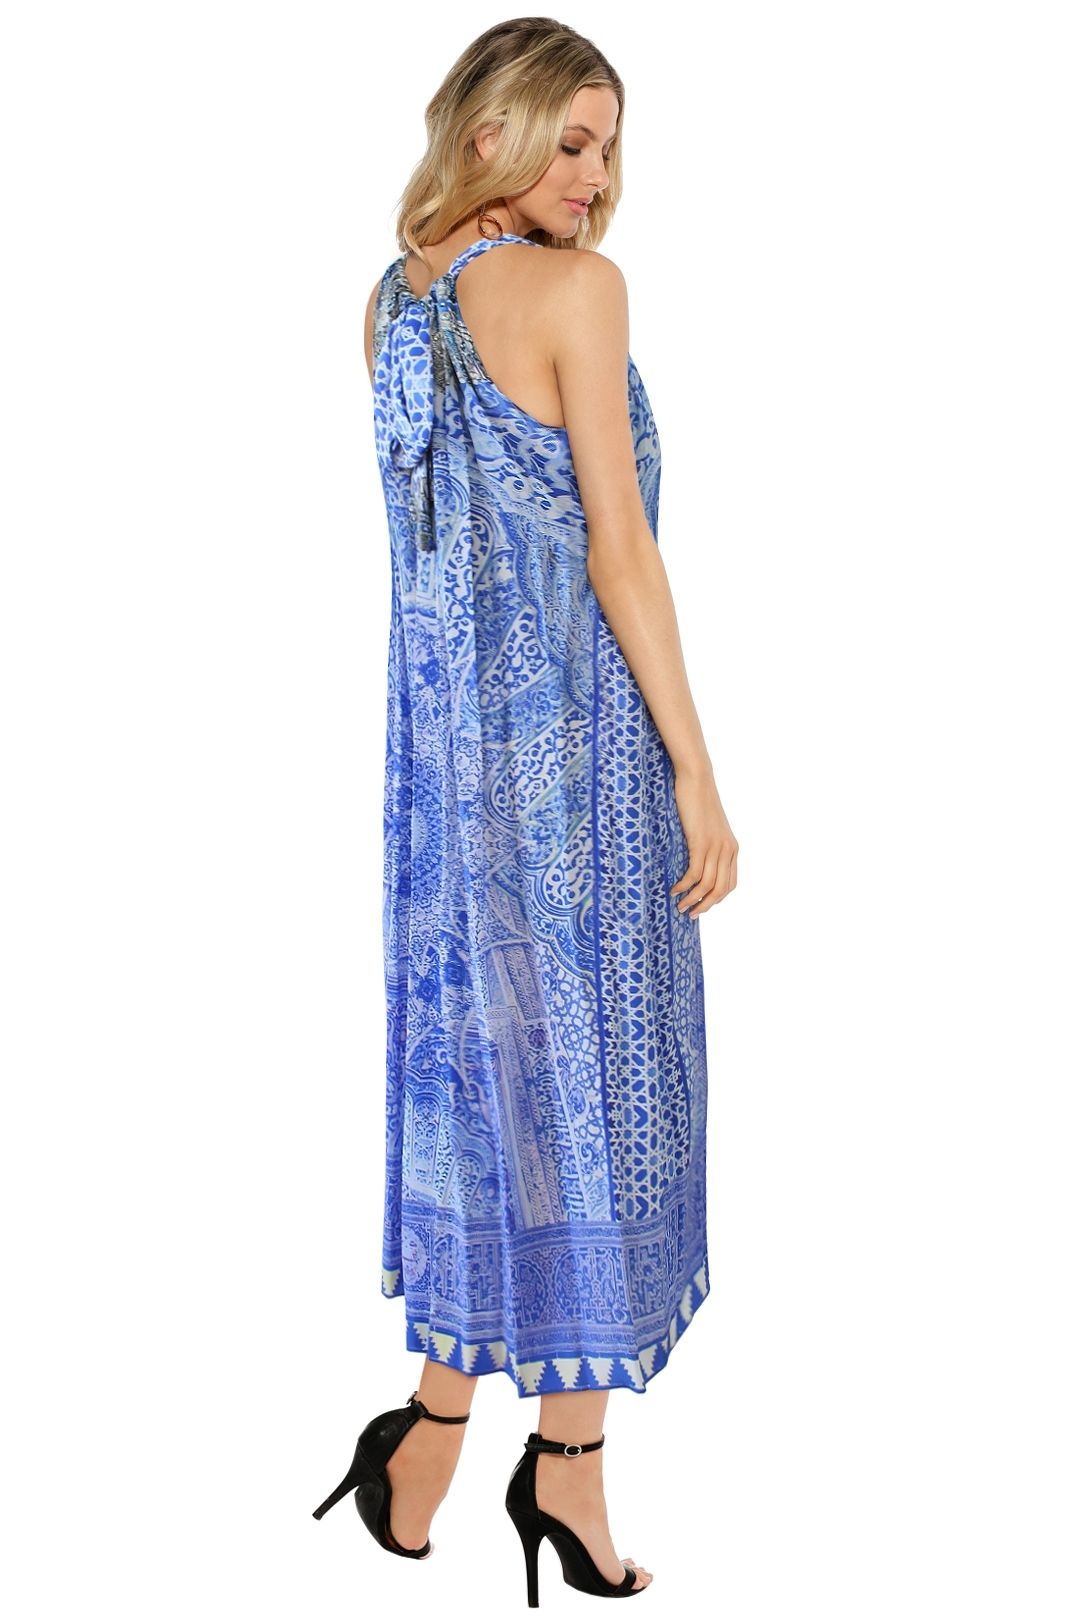 Camilla - Bosphorous Drawstring Dress - Prints - Back